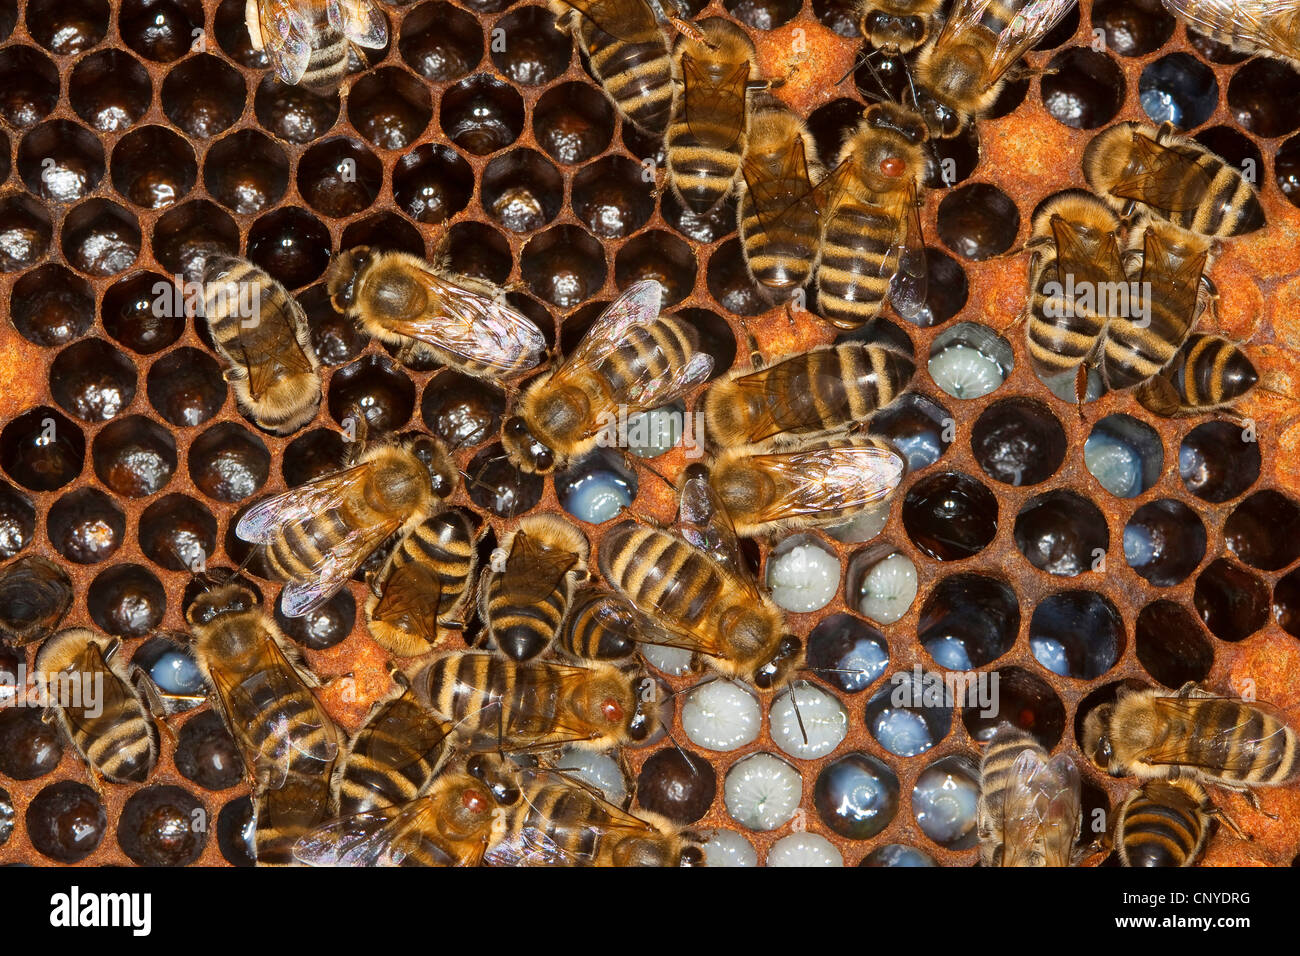 Panal de miel fotografías e imágenes de alta resolución - Alamy